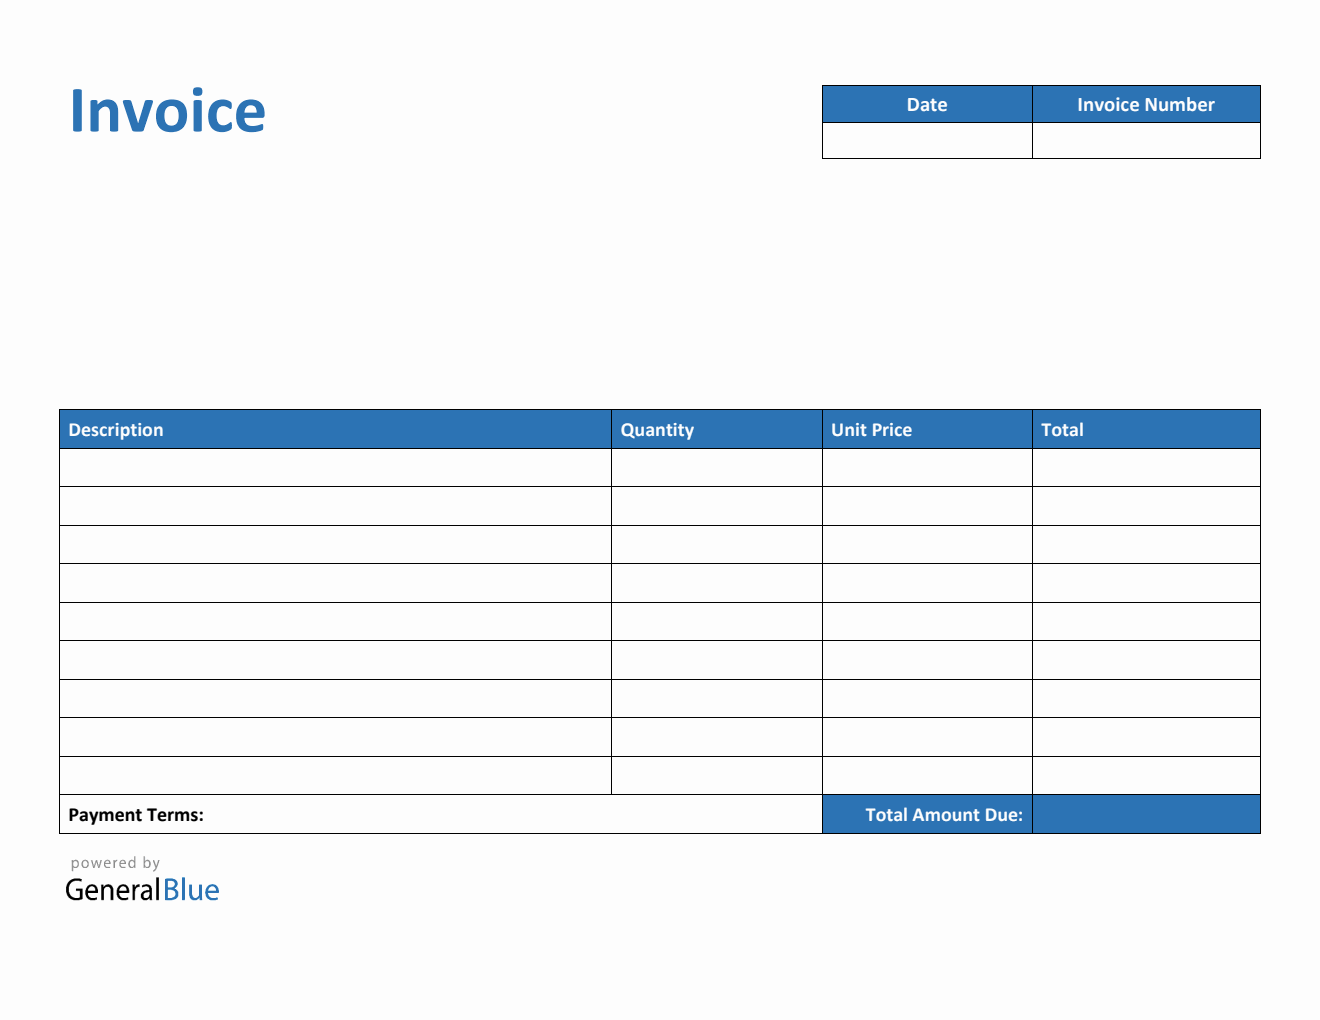 Invoice Template for U.K. in PDF (Blue)